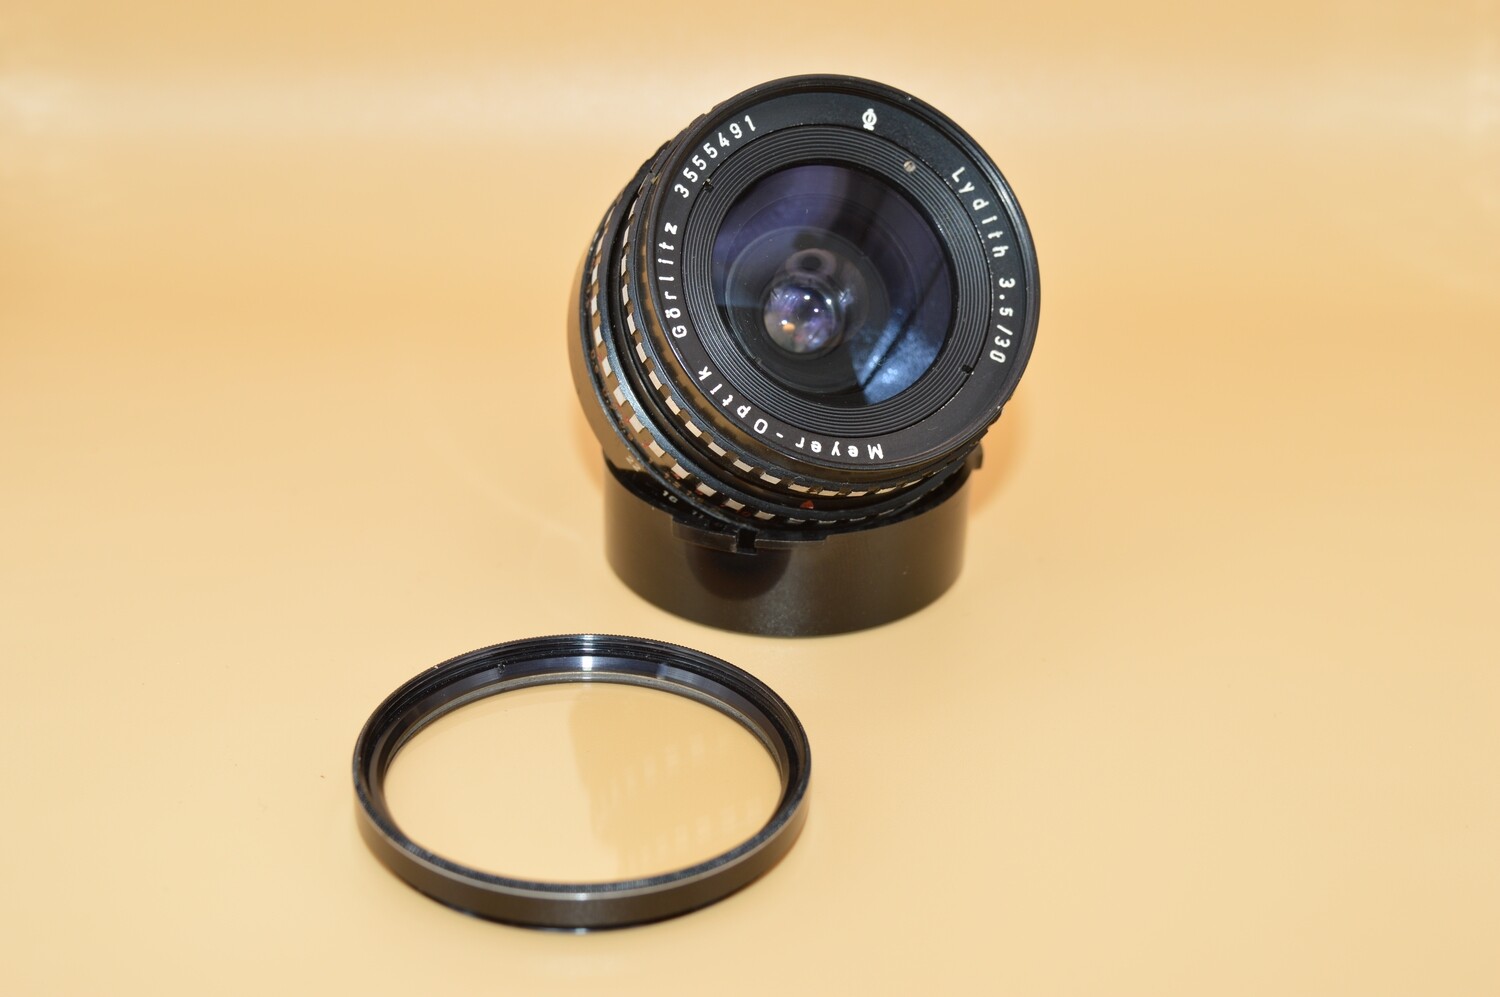 Meyer Optik Gorlitz Lydith 3.5/30 lens - As Is